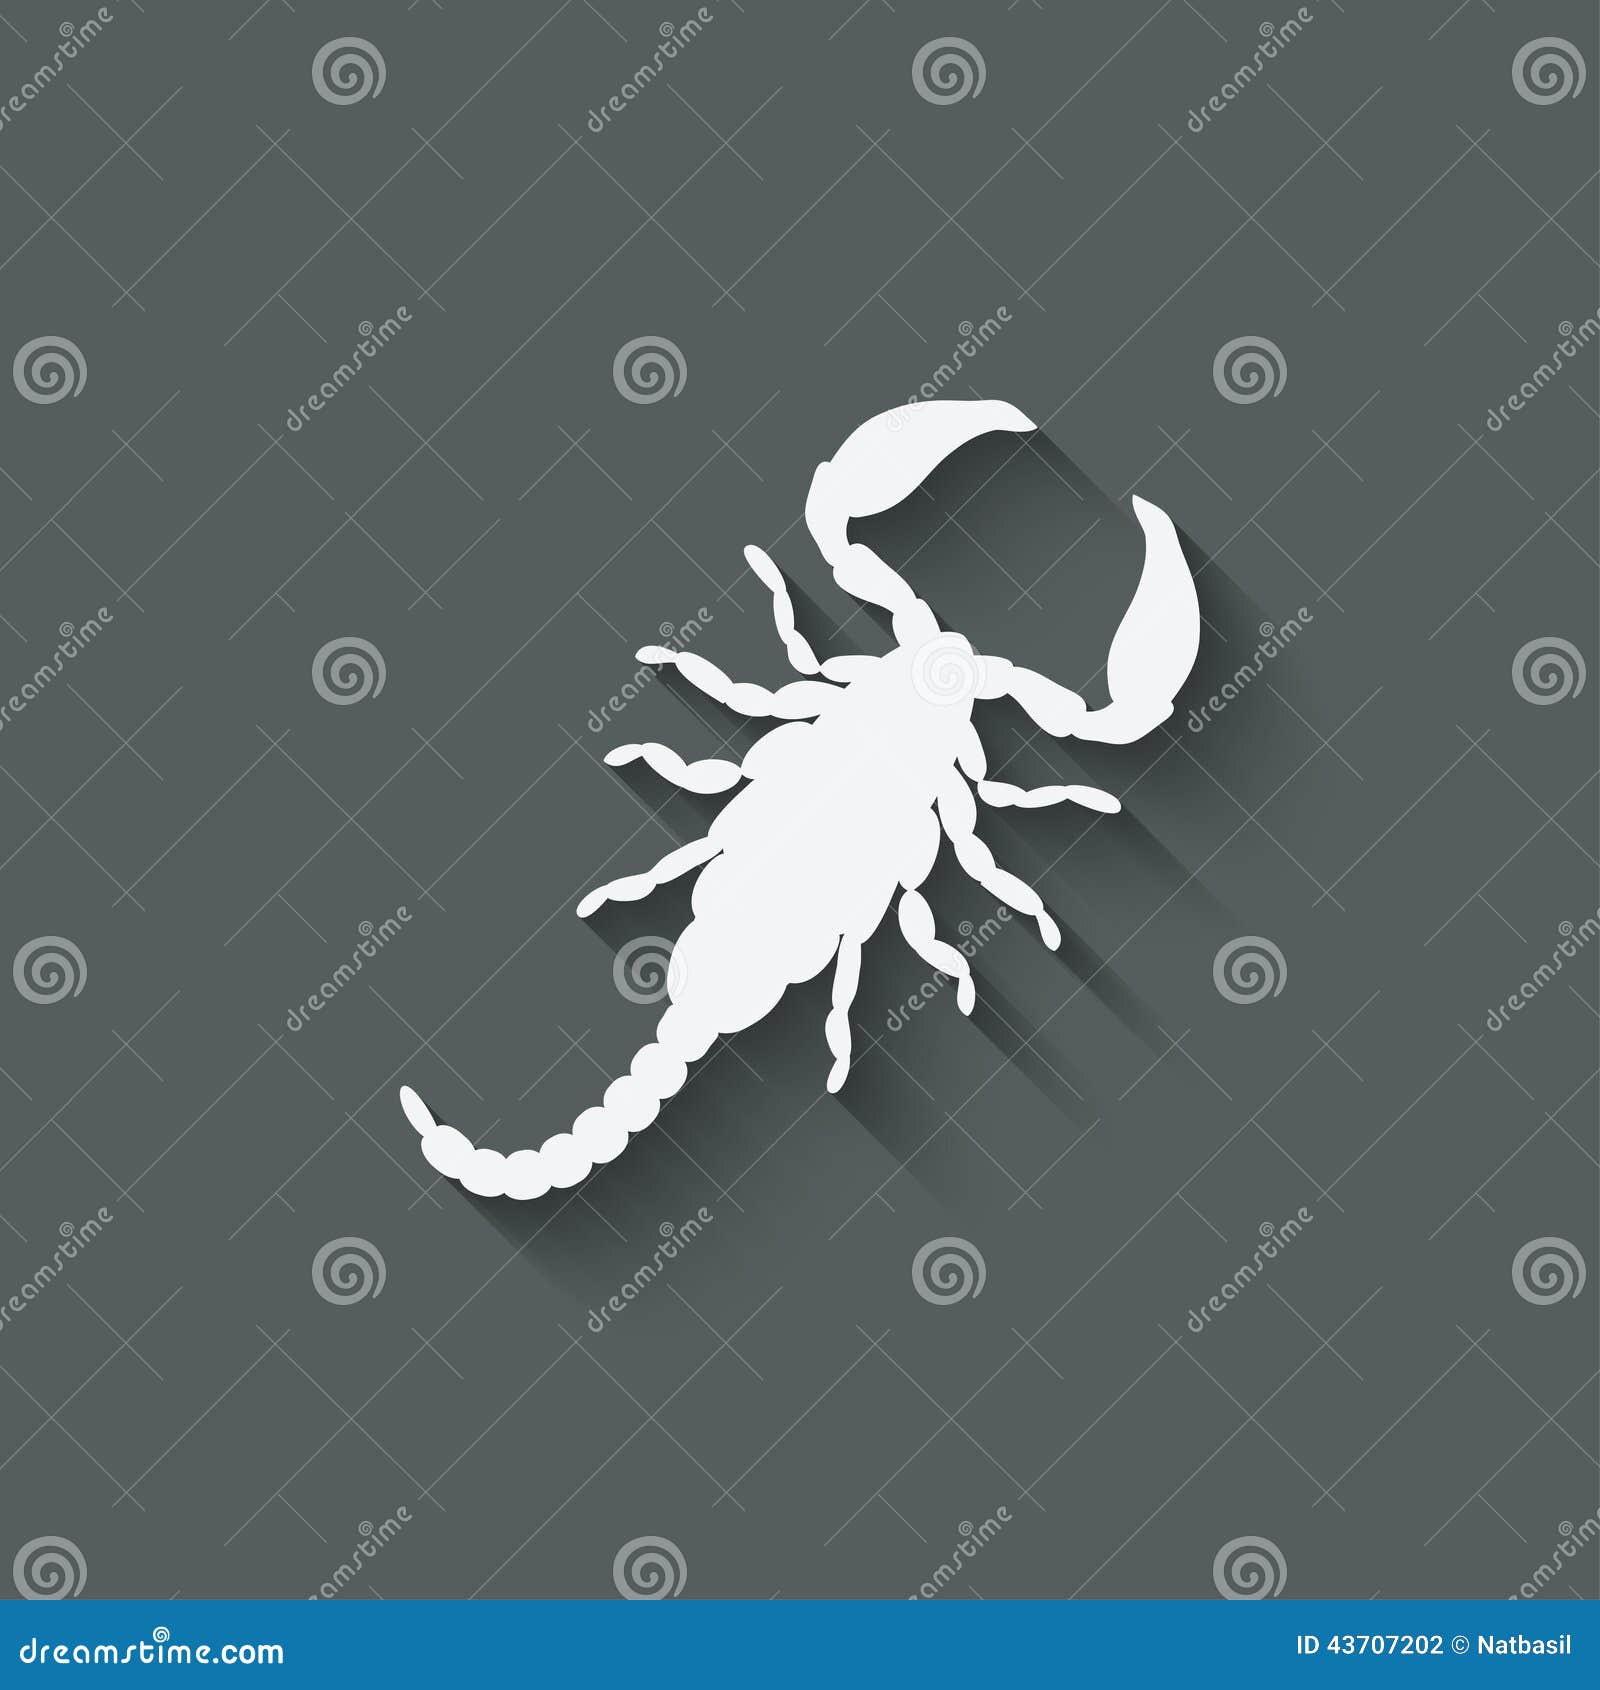 Scorpion Stock Illustrations 4,699 Scorpion Element Stock Illustrations, Vectors & - Dreamstime